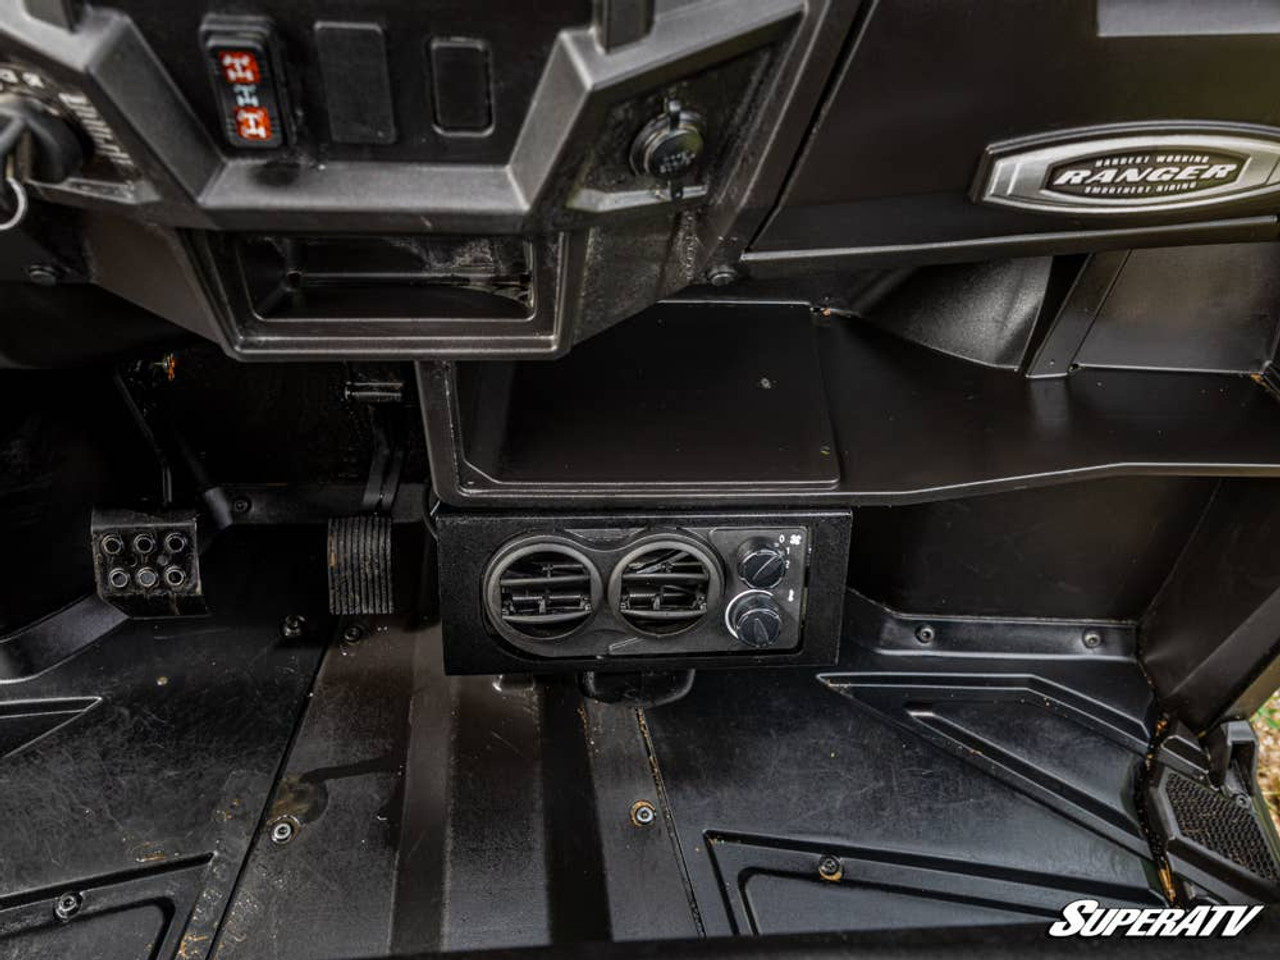 UTV Side X Side Midsize Polaris Ranger 570 Cab Heater